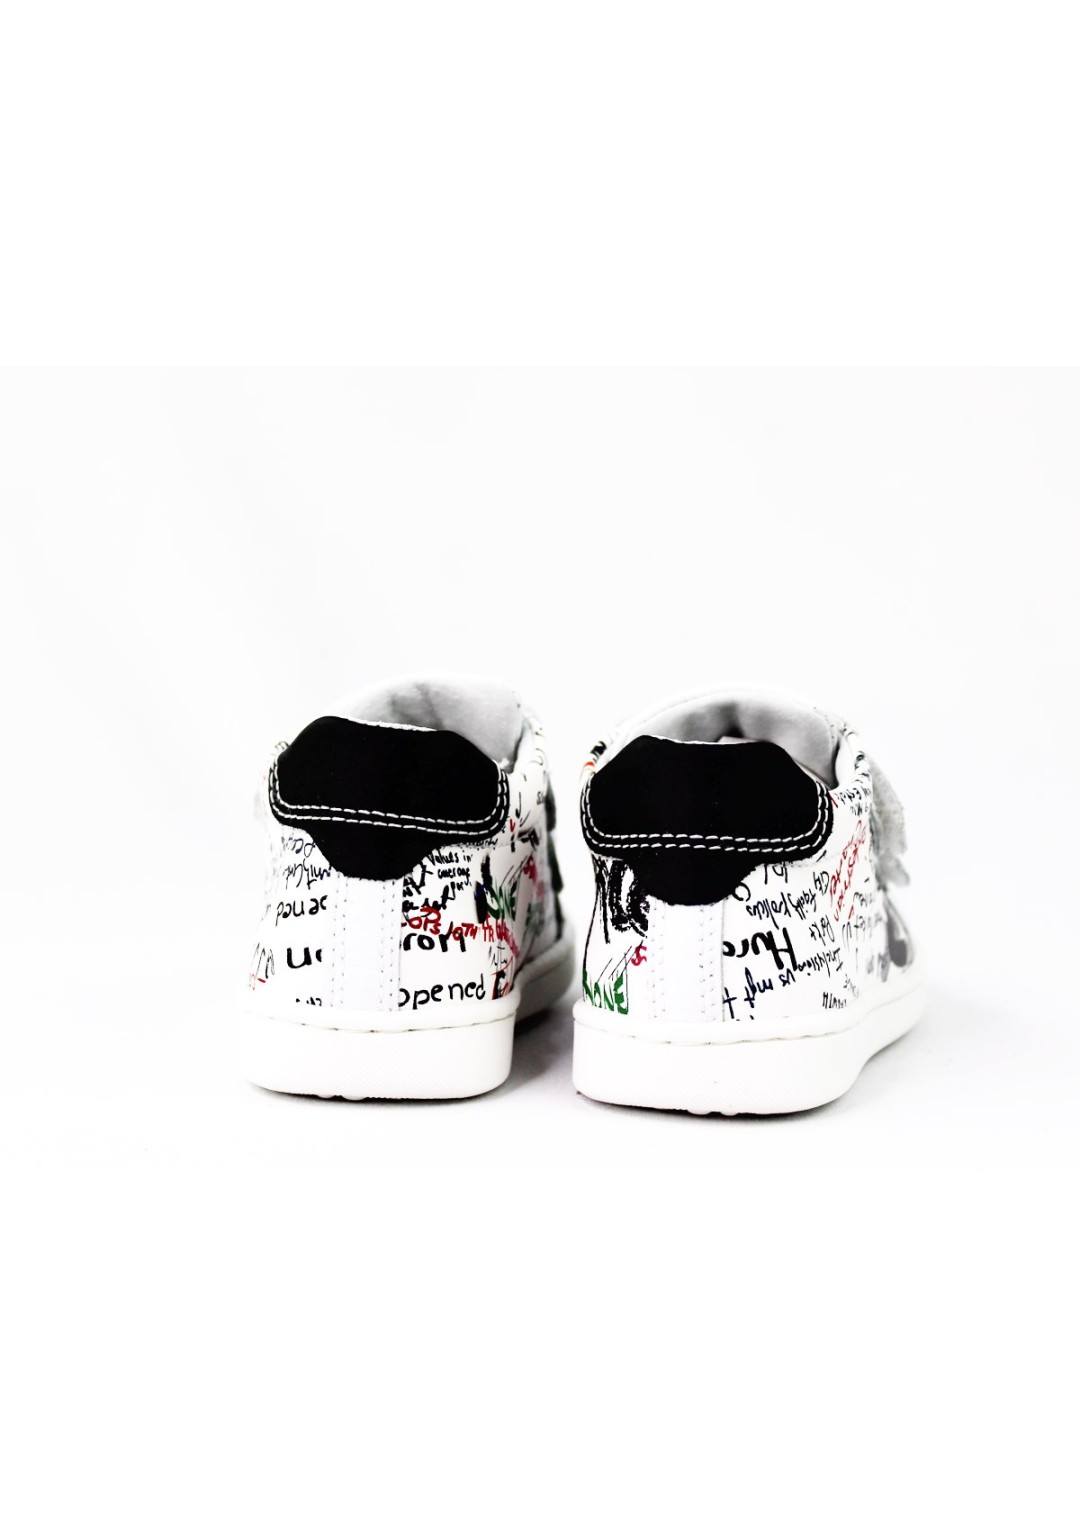 NEROGIARDINI Baby Sneakers 18/23